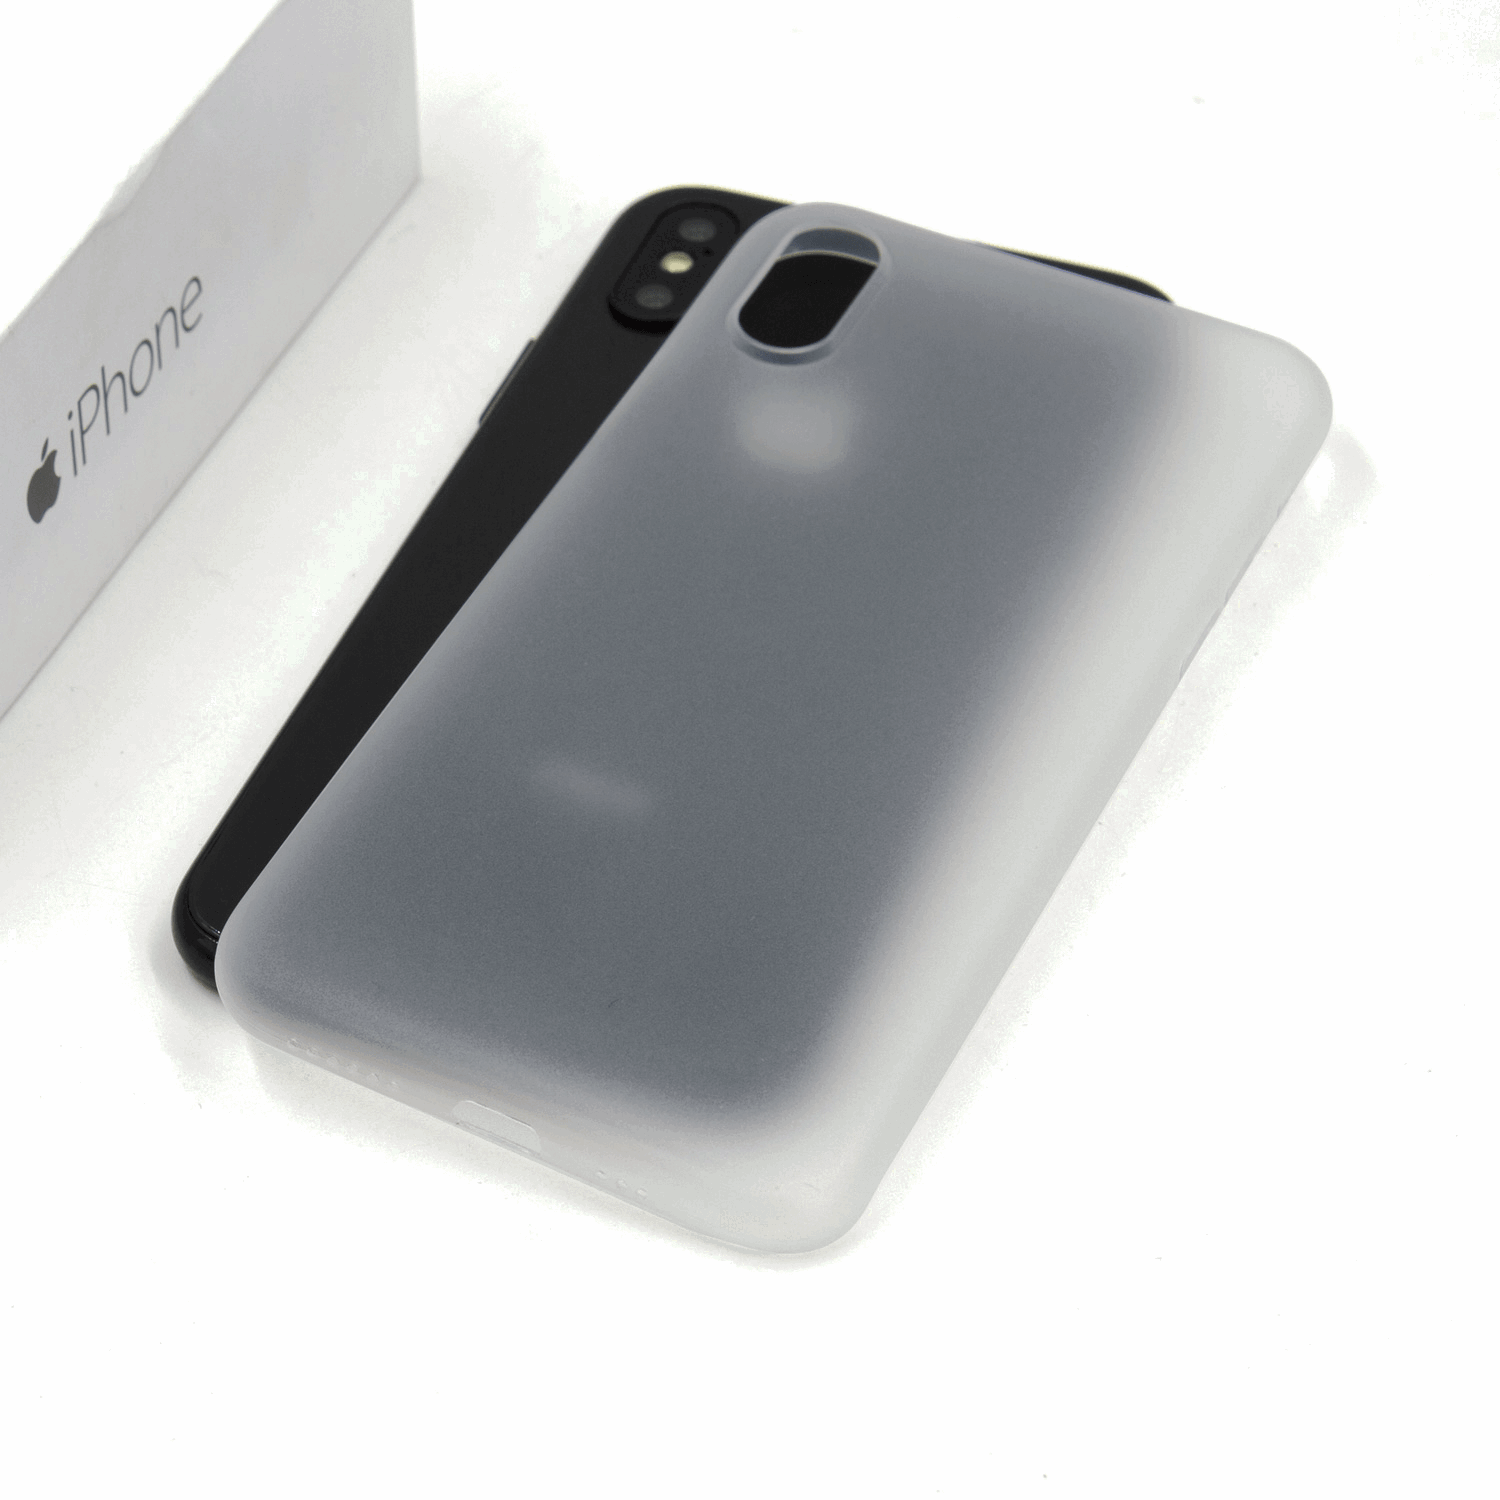 iPhone XS - Ultra Thin Case